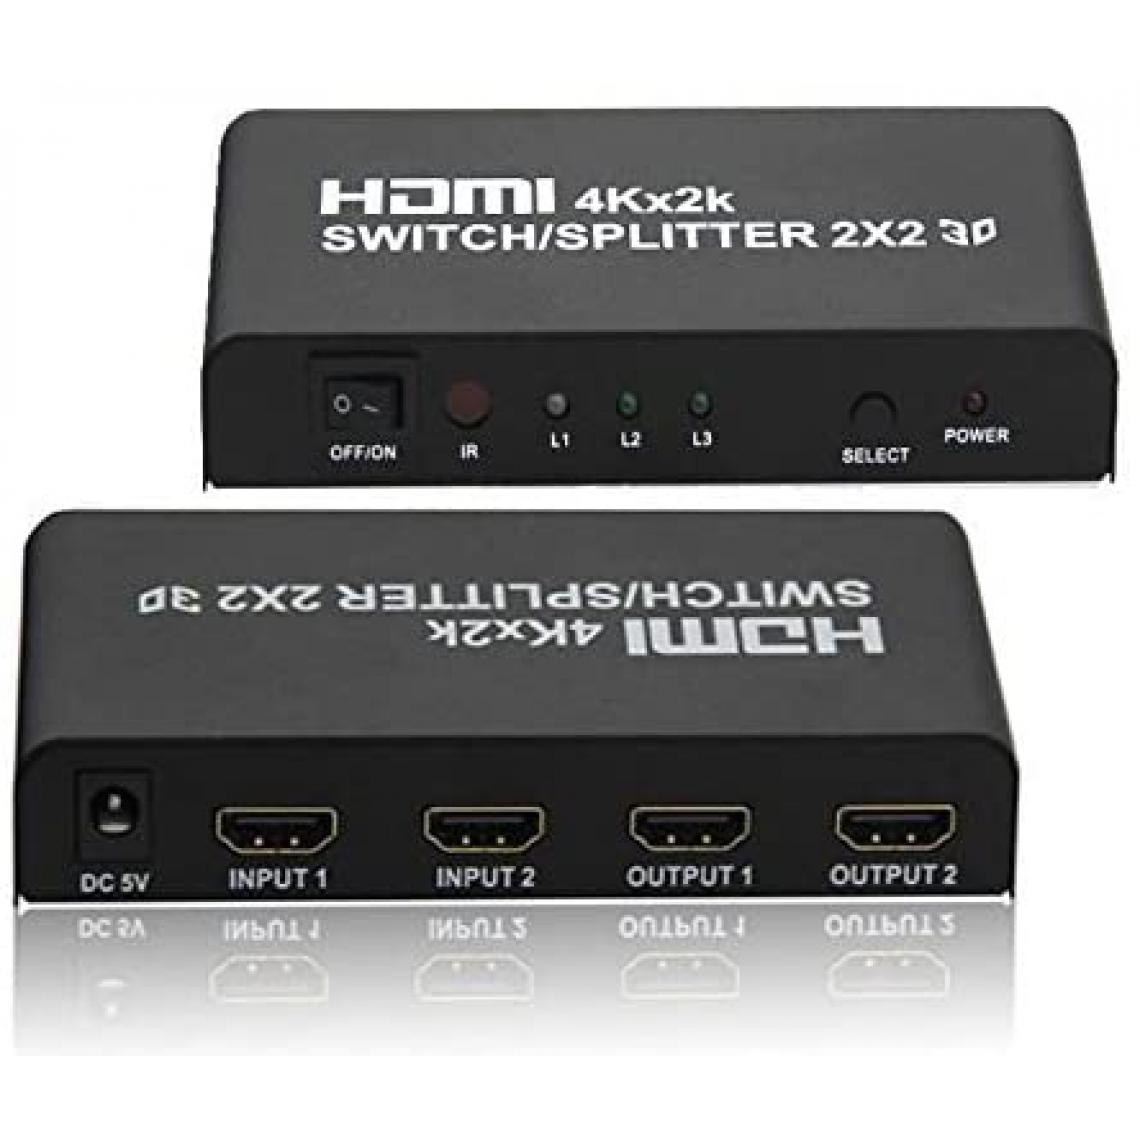 Mcl - 3D 4K2K HDMI SPLITTER - Adaptateurs